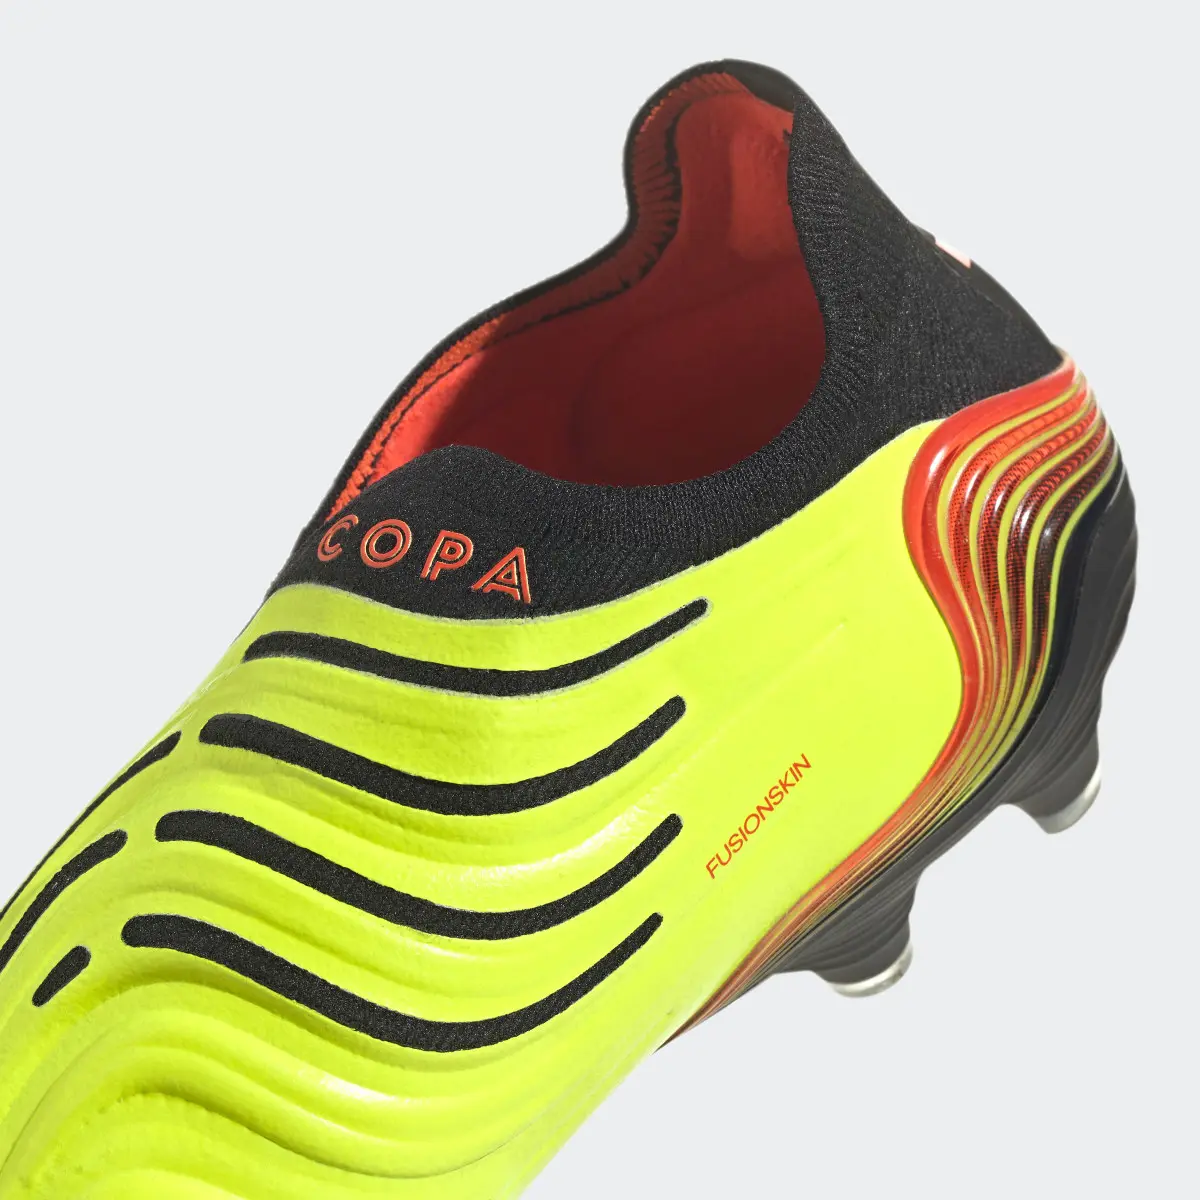 Adidas Copa Sense+ Firm Ground Boots. 3